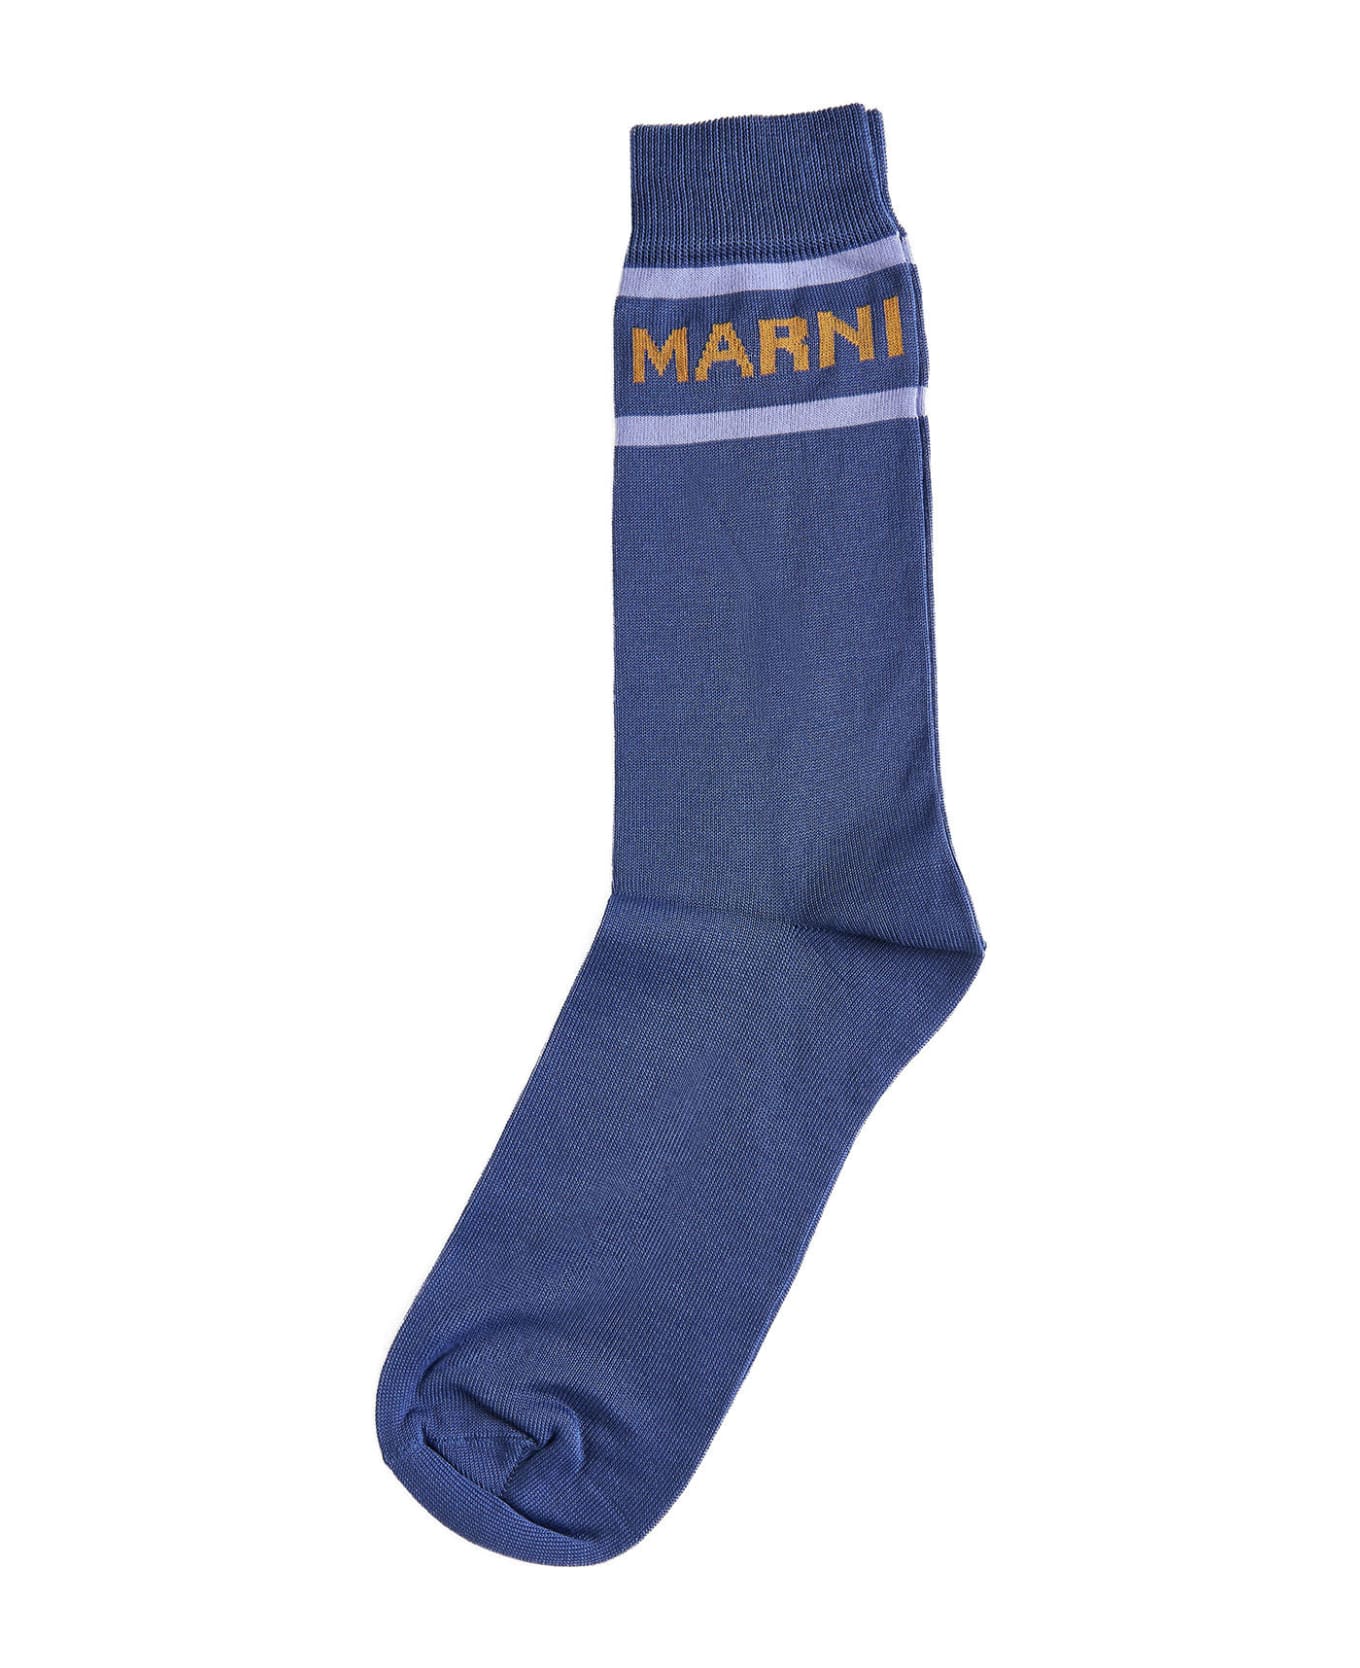 Marni Socks - Blue sodalite